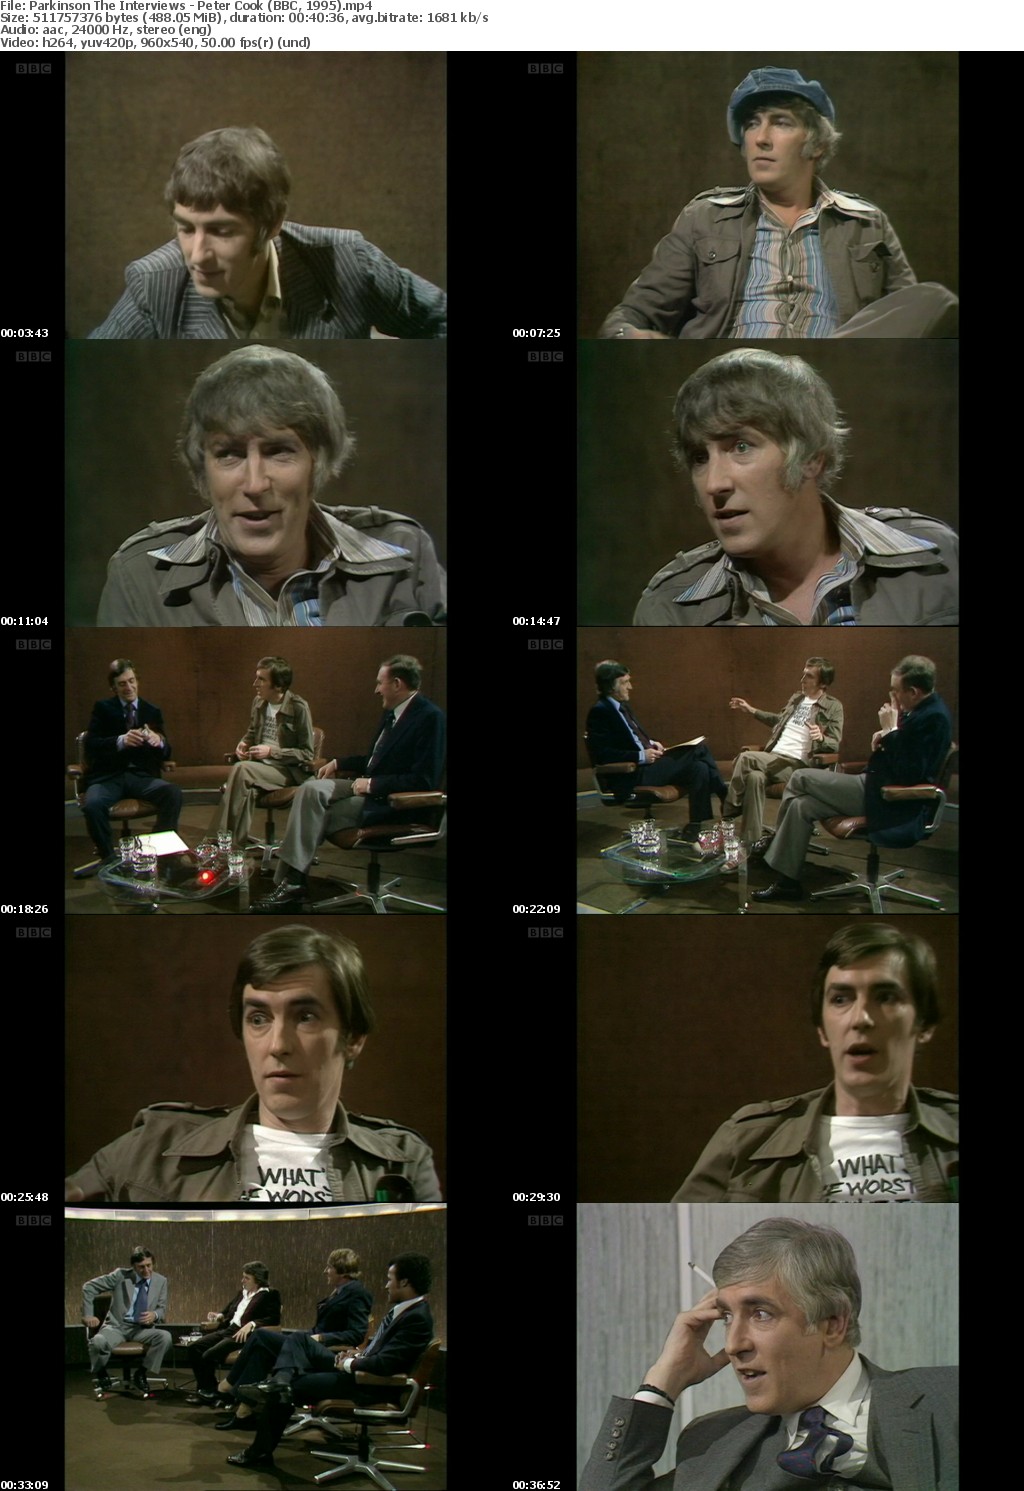 Parkinson The Interviews - Peter Cook (BBC, 1995) (960*540p, soft Eng subs)